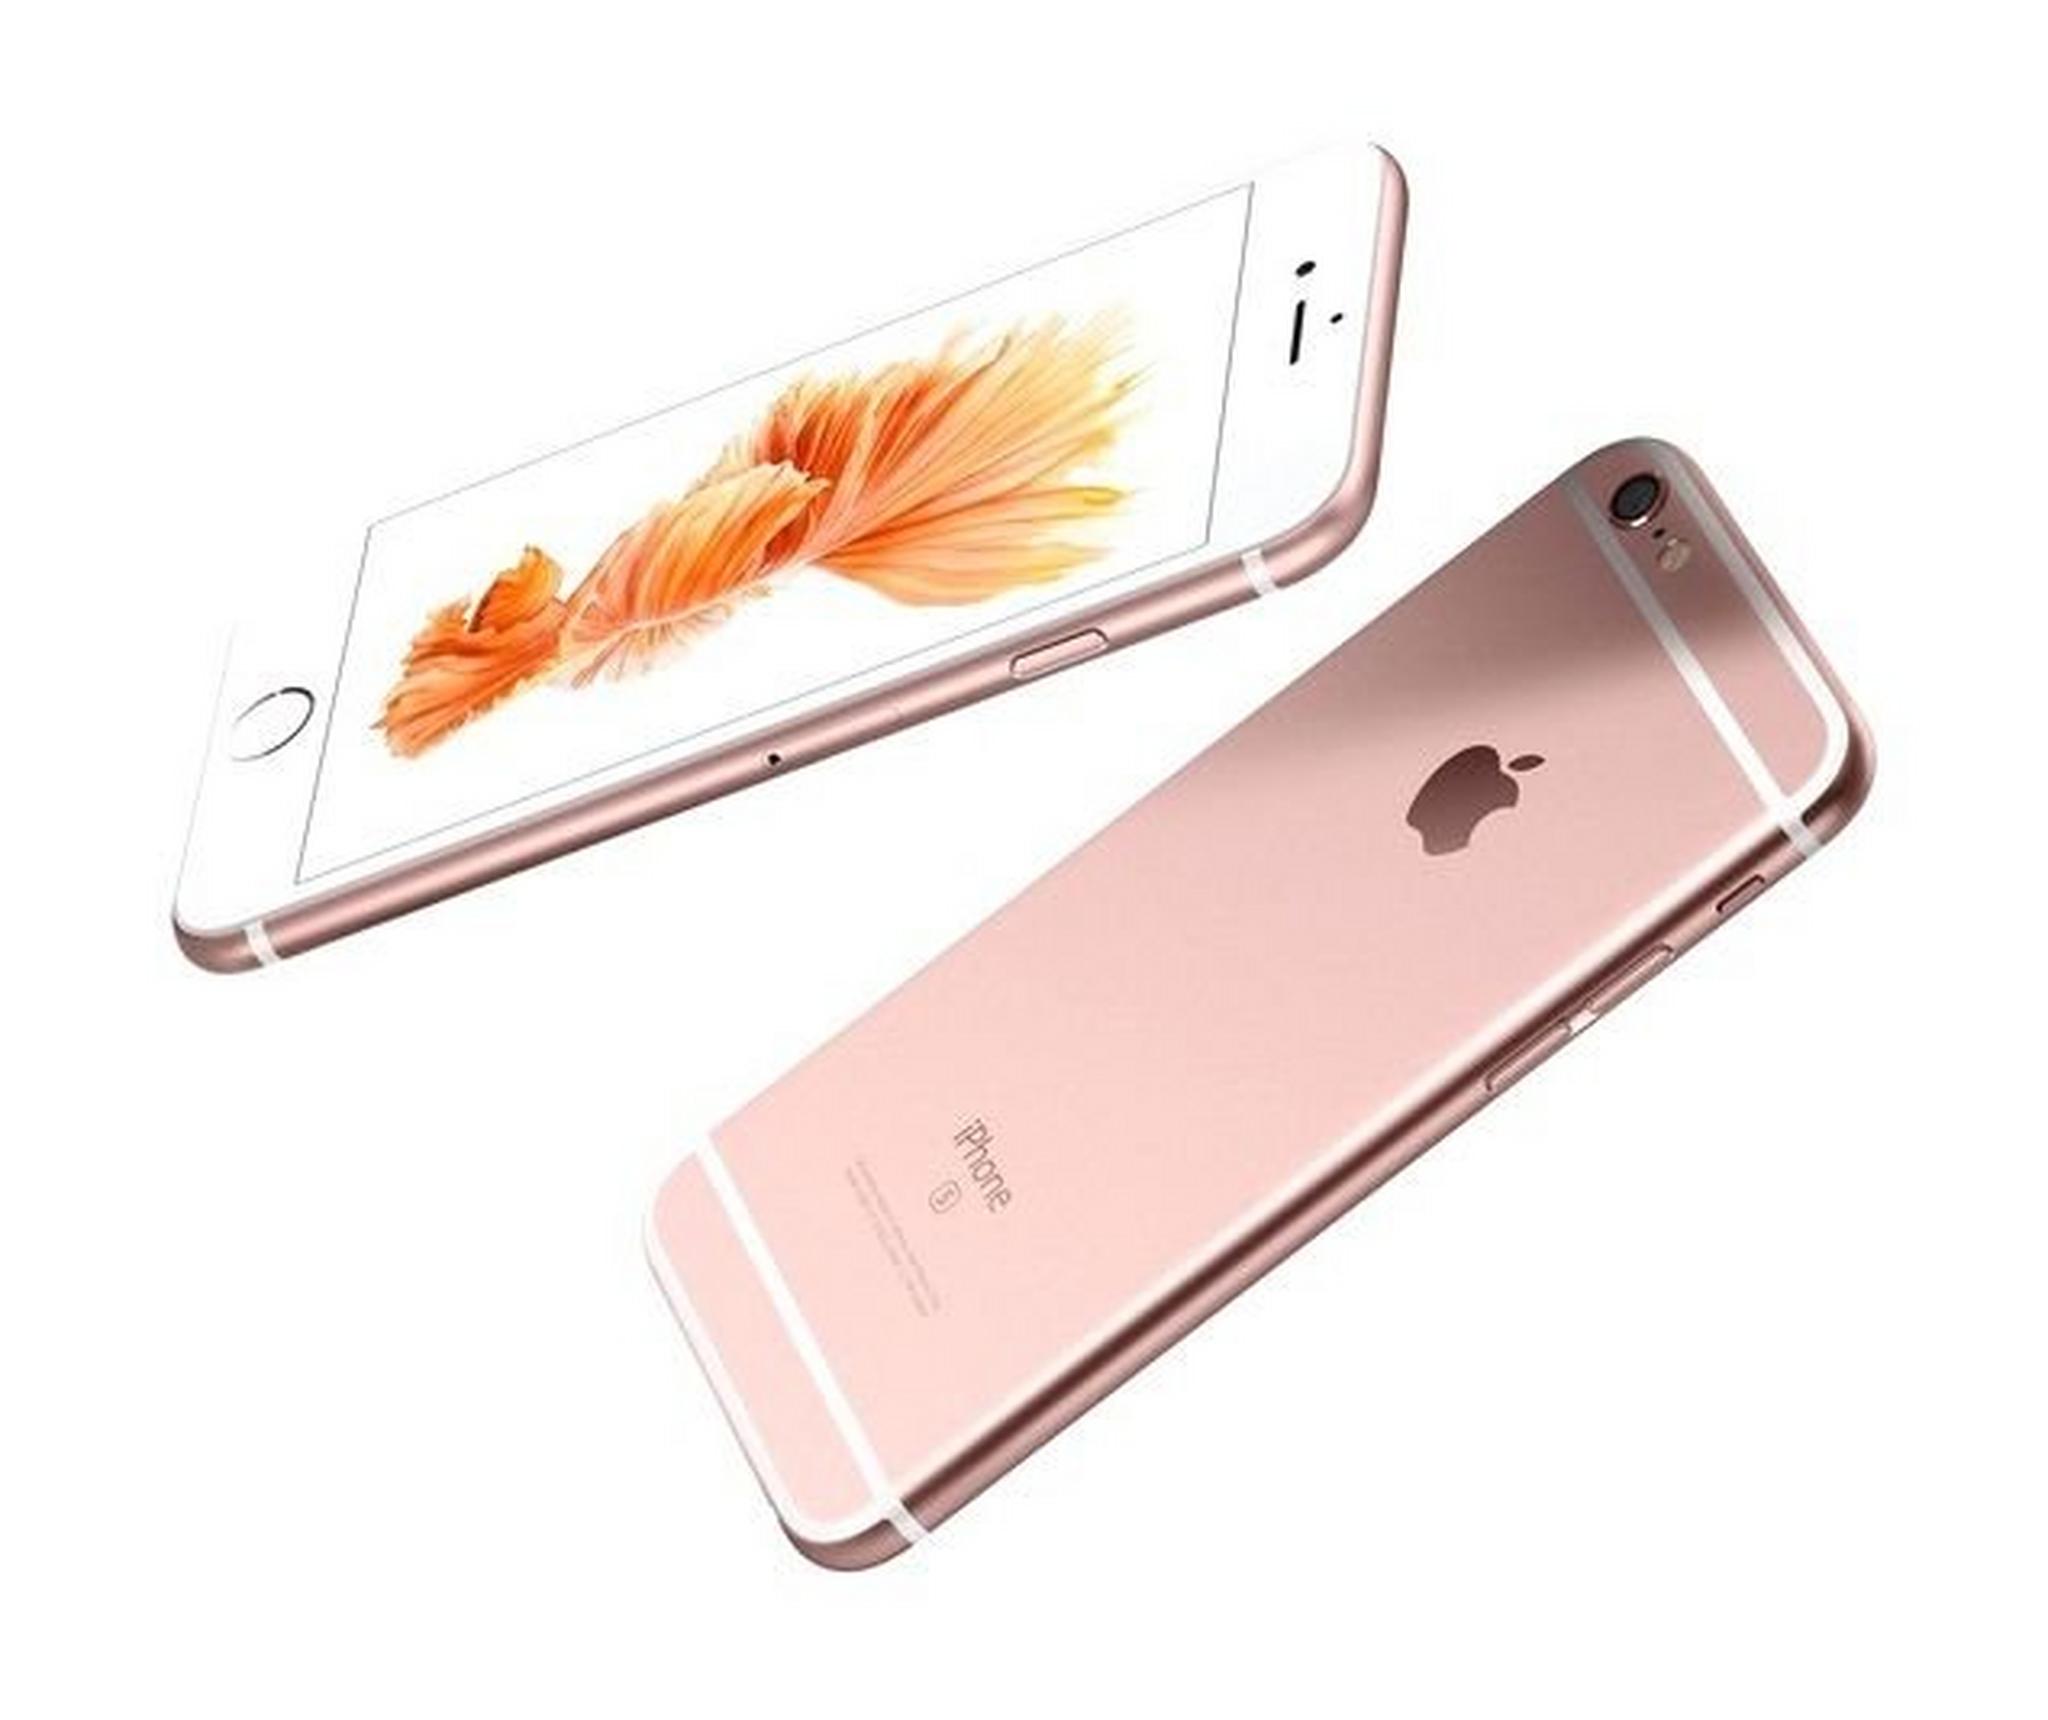 Apple iPhone 6S Plus 128GB 12MP 4G LTE Smartphone - Rose Gold